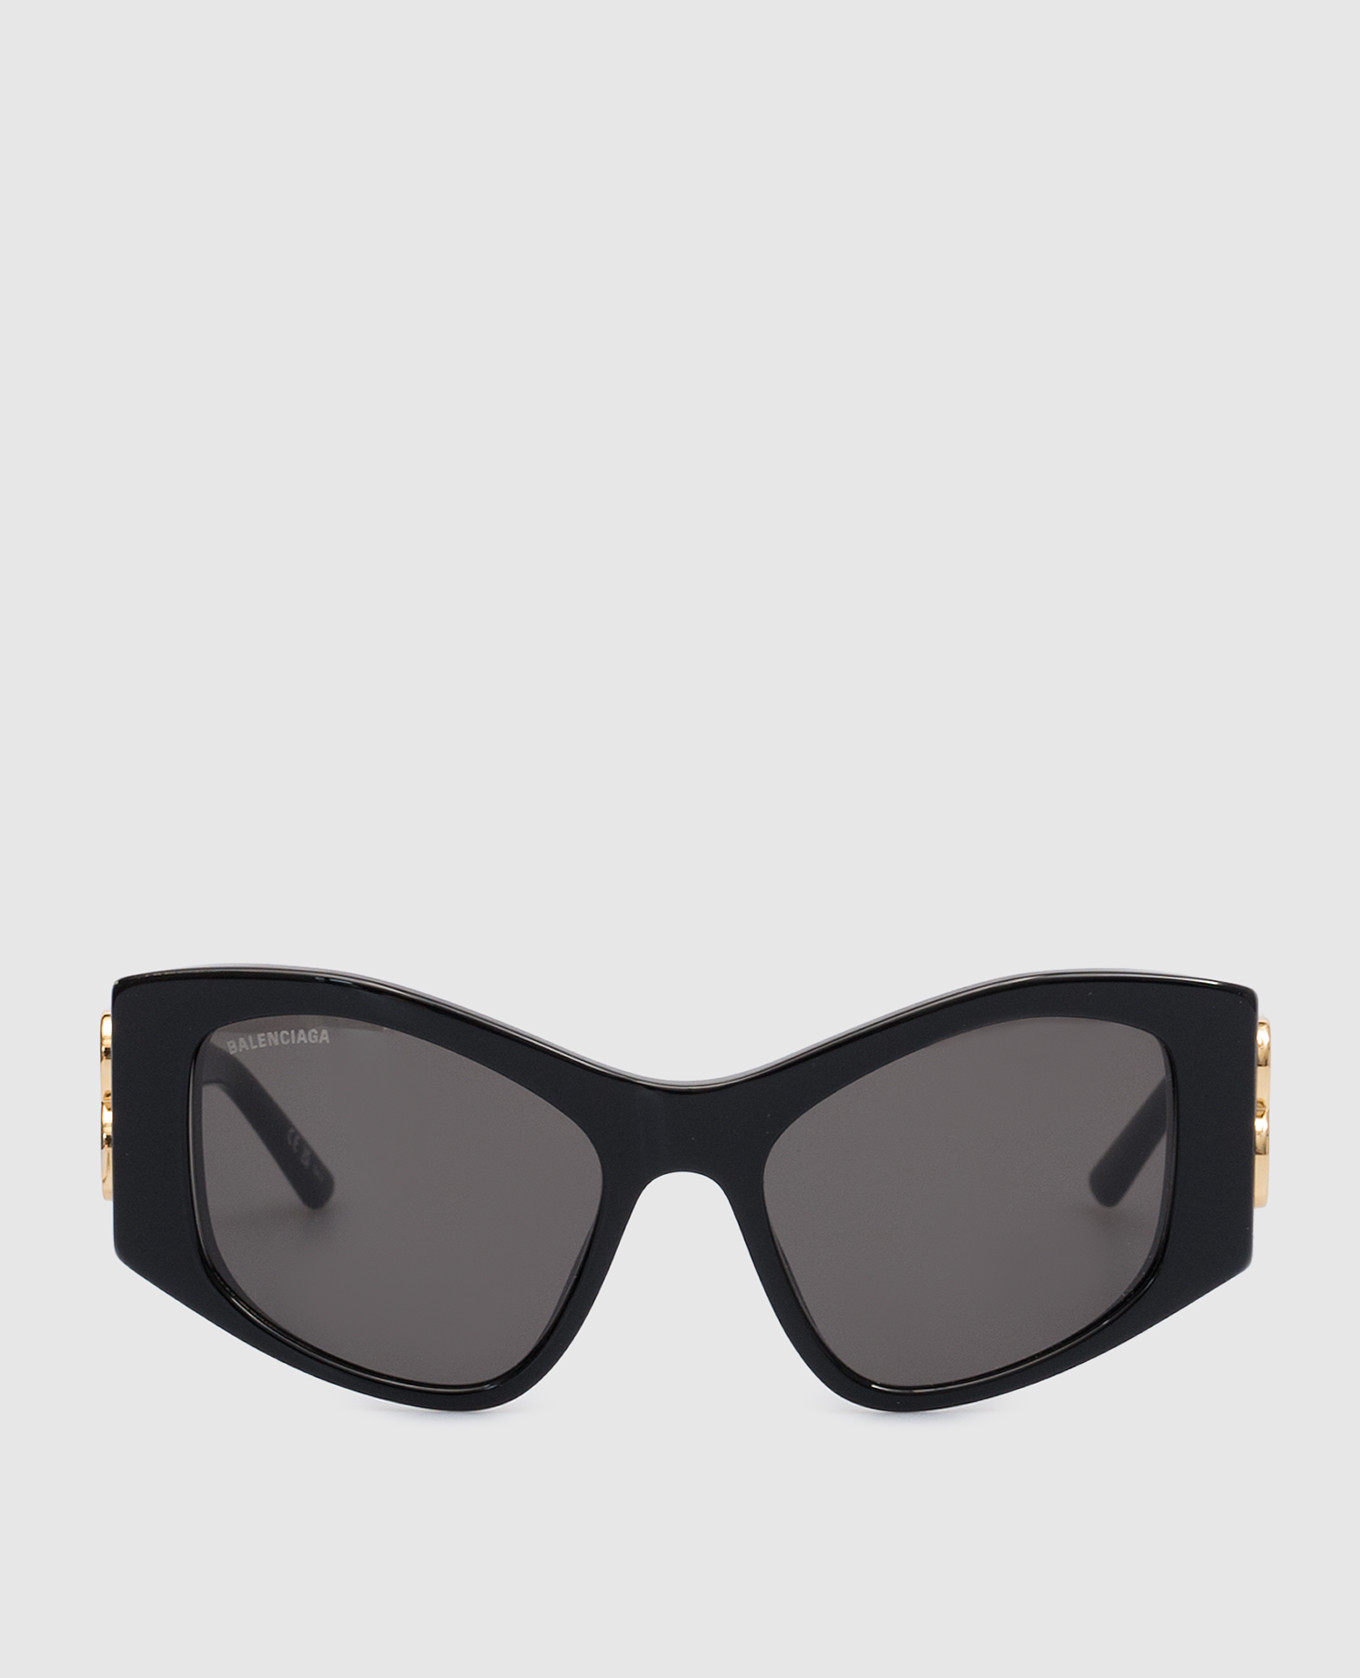 Dynasty logo sunglasses in black